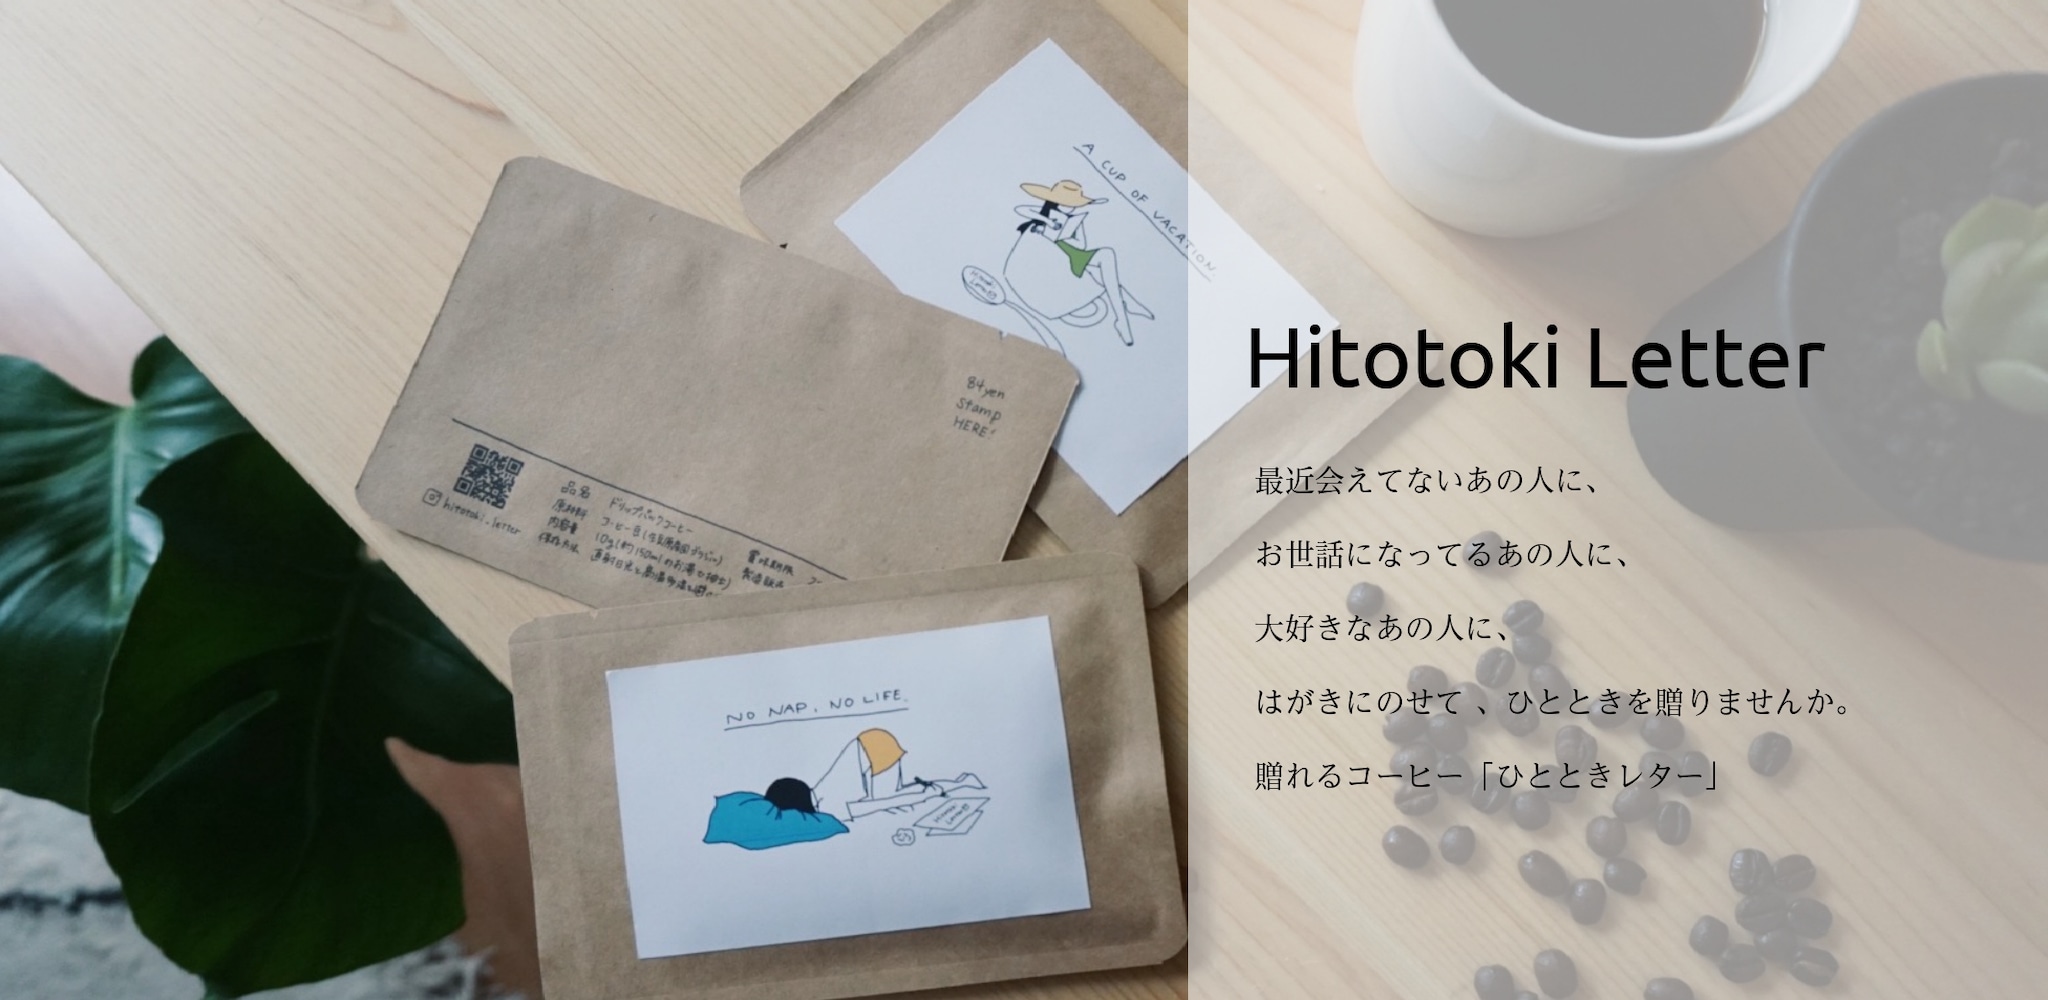 Hitotoki Letter